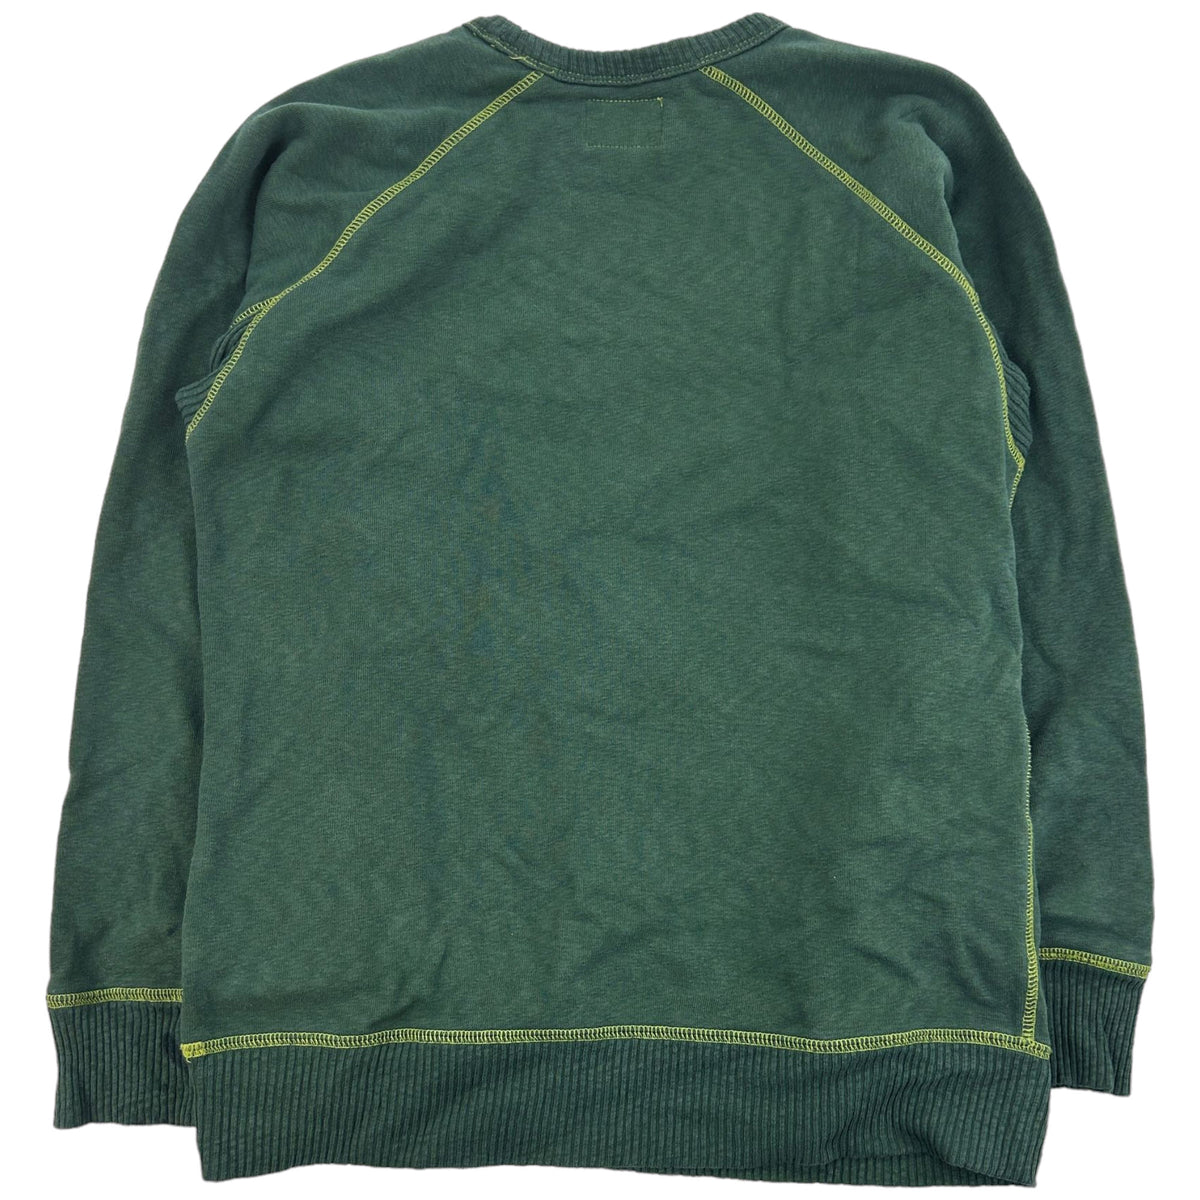 Vintage Stussy Crewneck Sweatshirt Size M